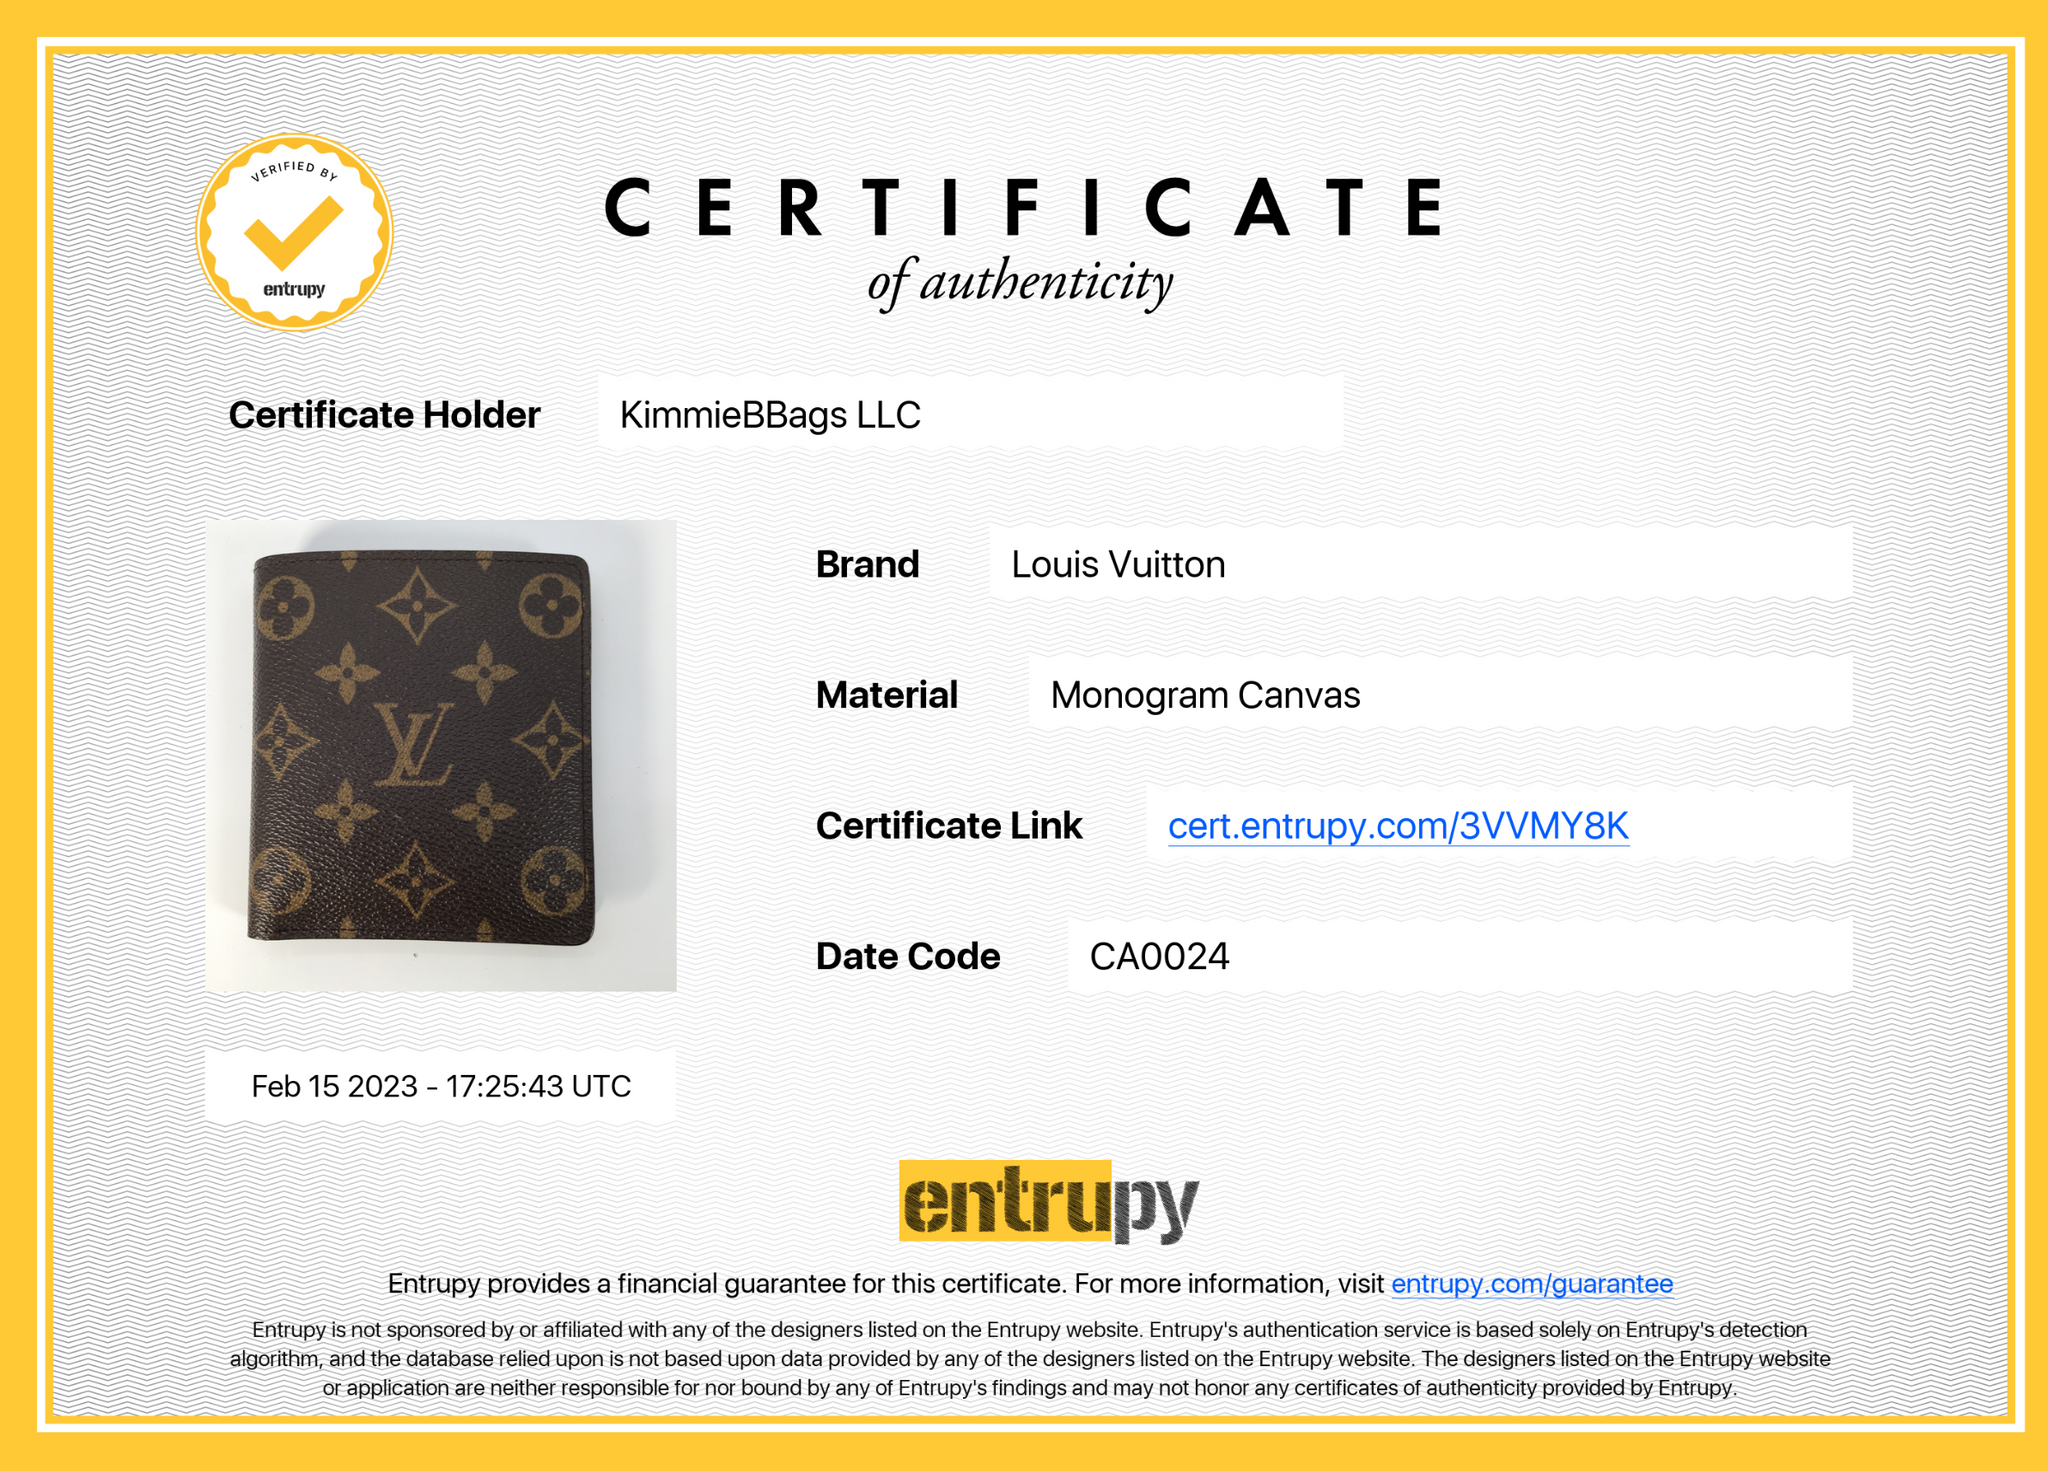 Louis Vuitton slim monogram credit card case